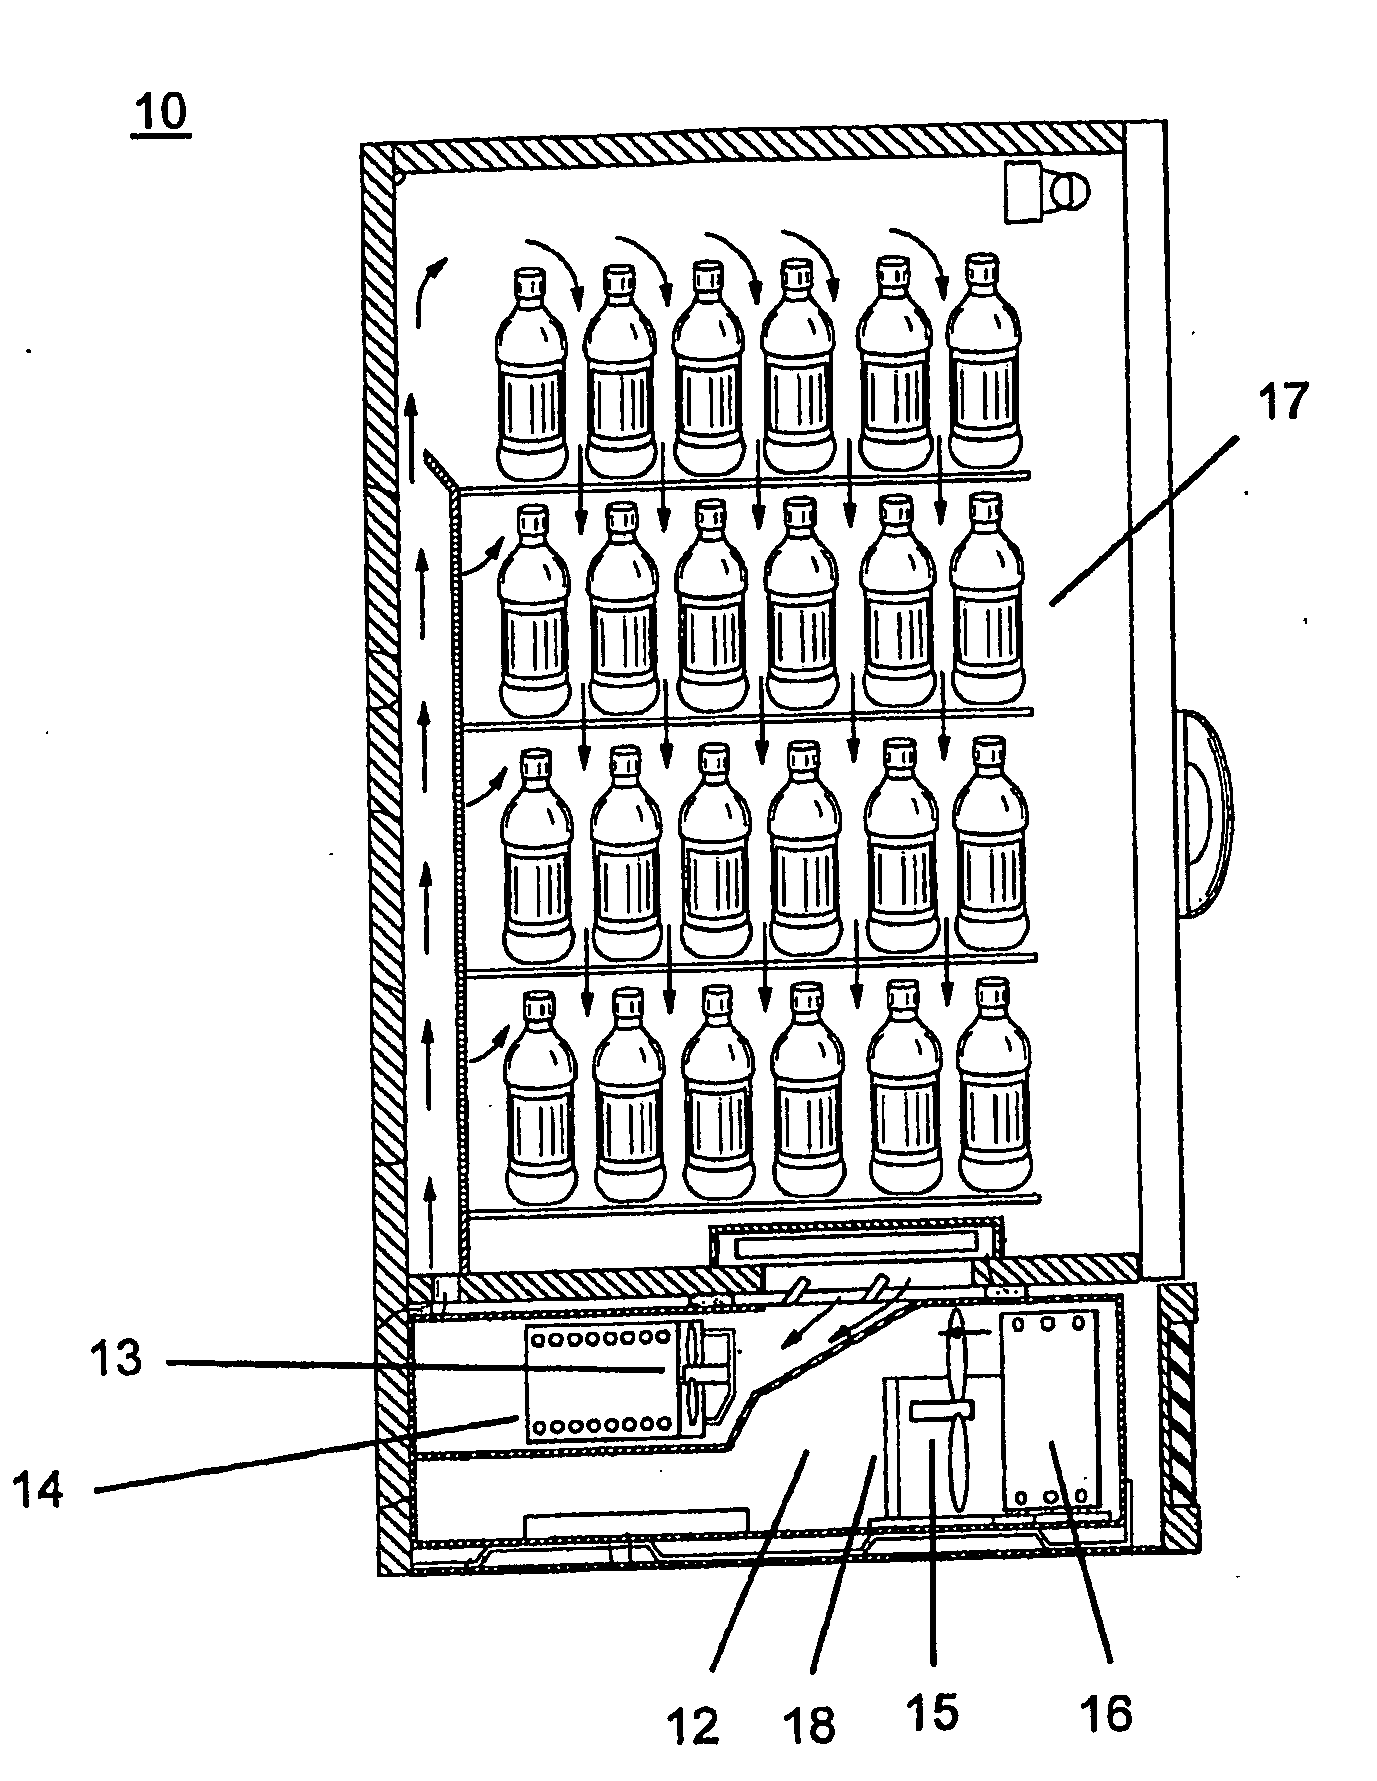 Evaporator fan motor control in a refrigerated merchandiser